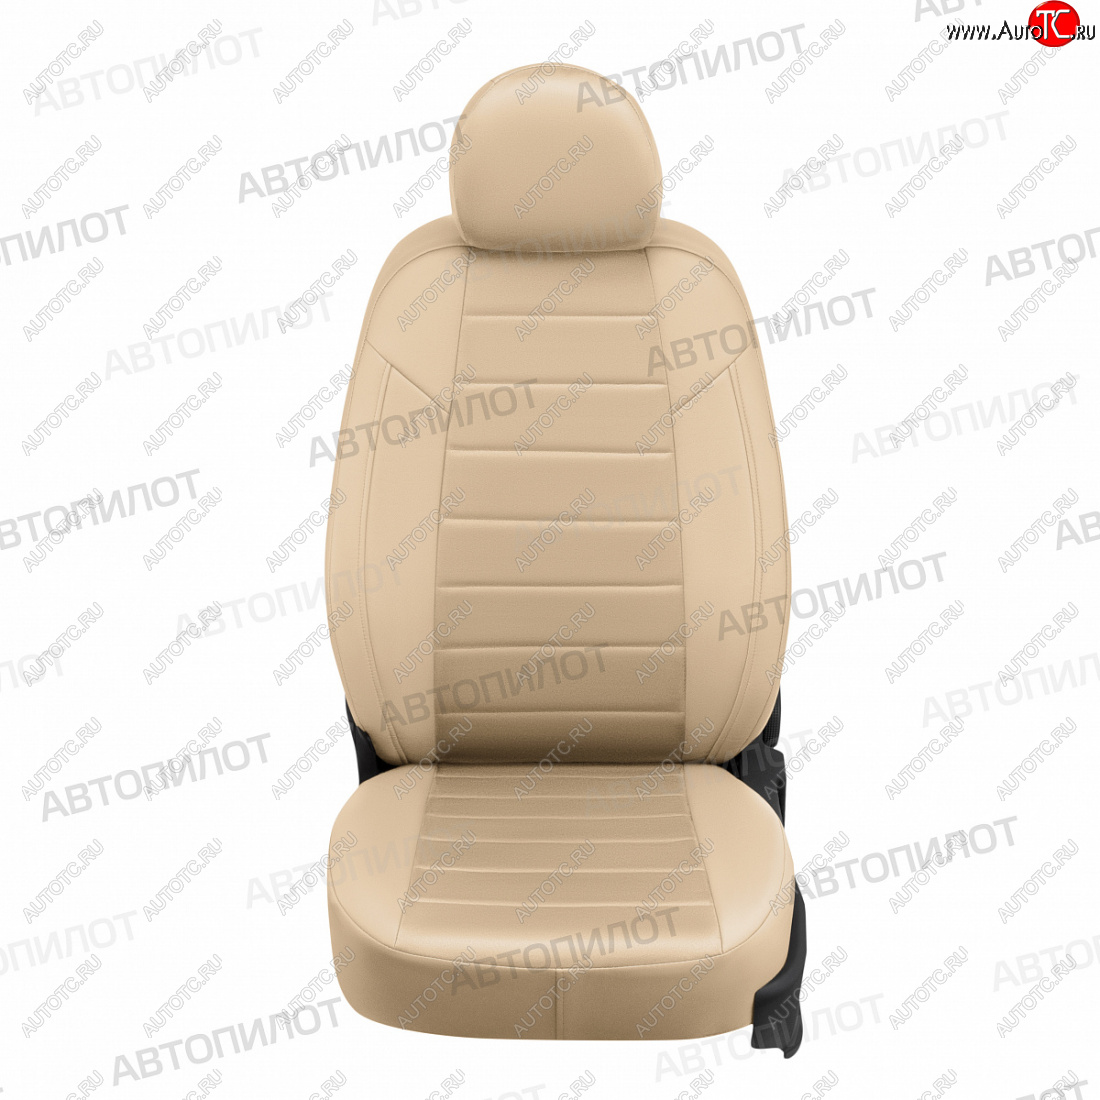 13 849 р. Чехлы сидений (экокожа/алькантара) Автопилот  Hyundai I30  2 GD (2011-2017) (бежевый)